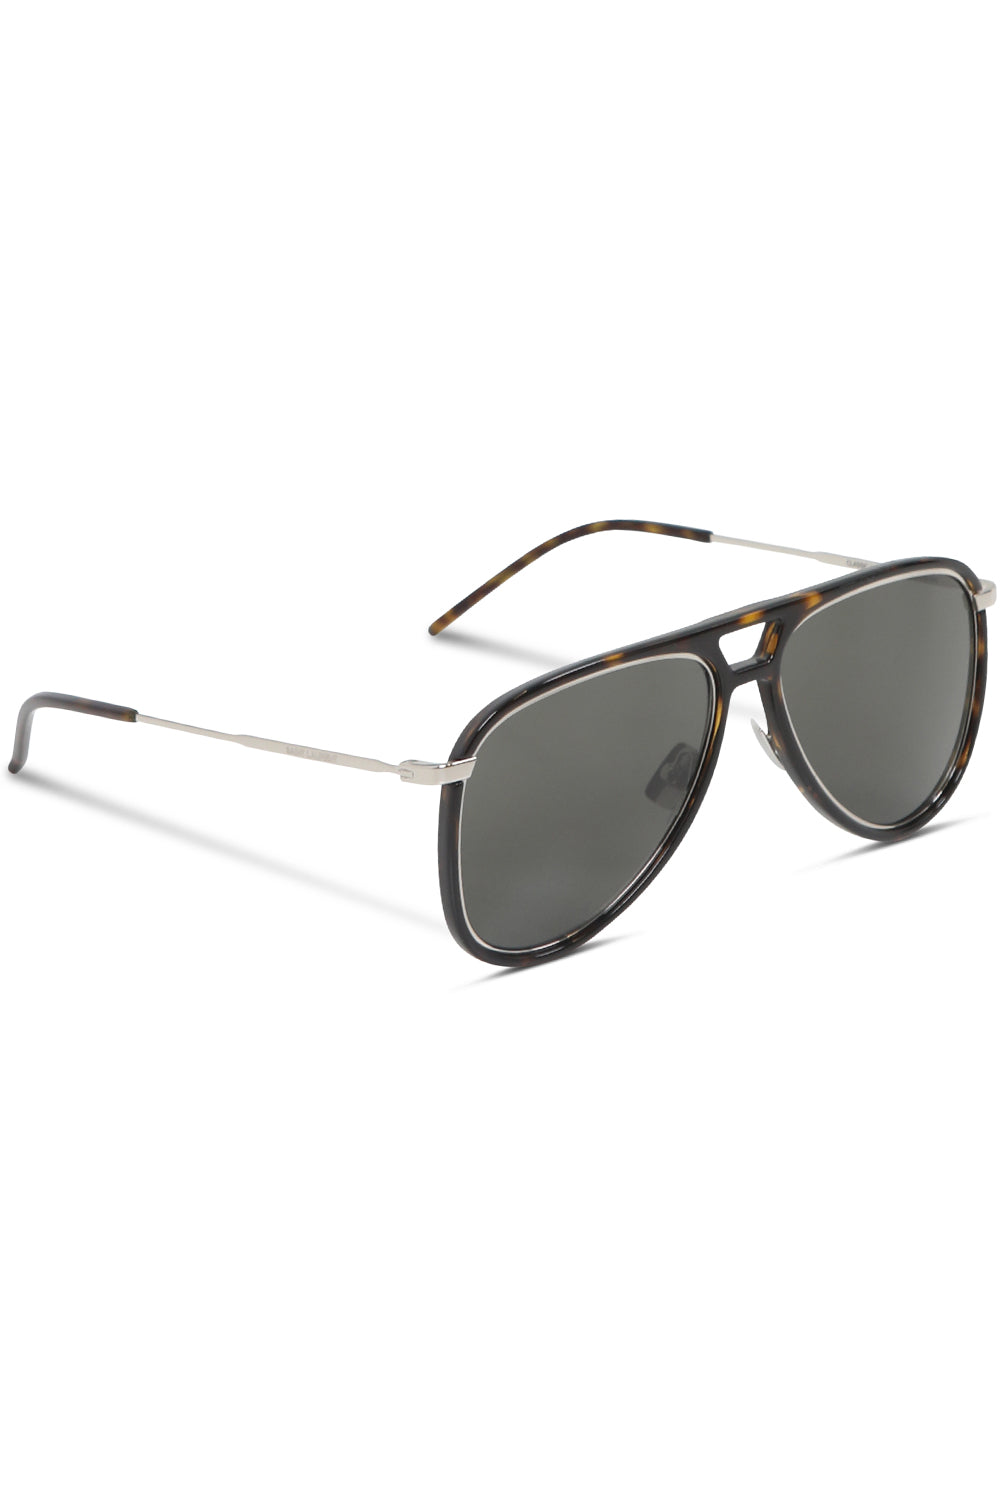 Saint Laurent Grey Aviator Metal Sunglasses